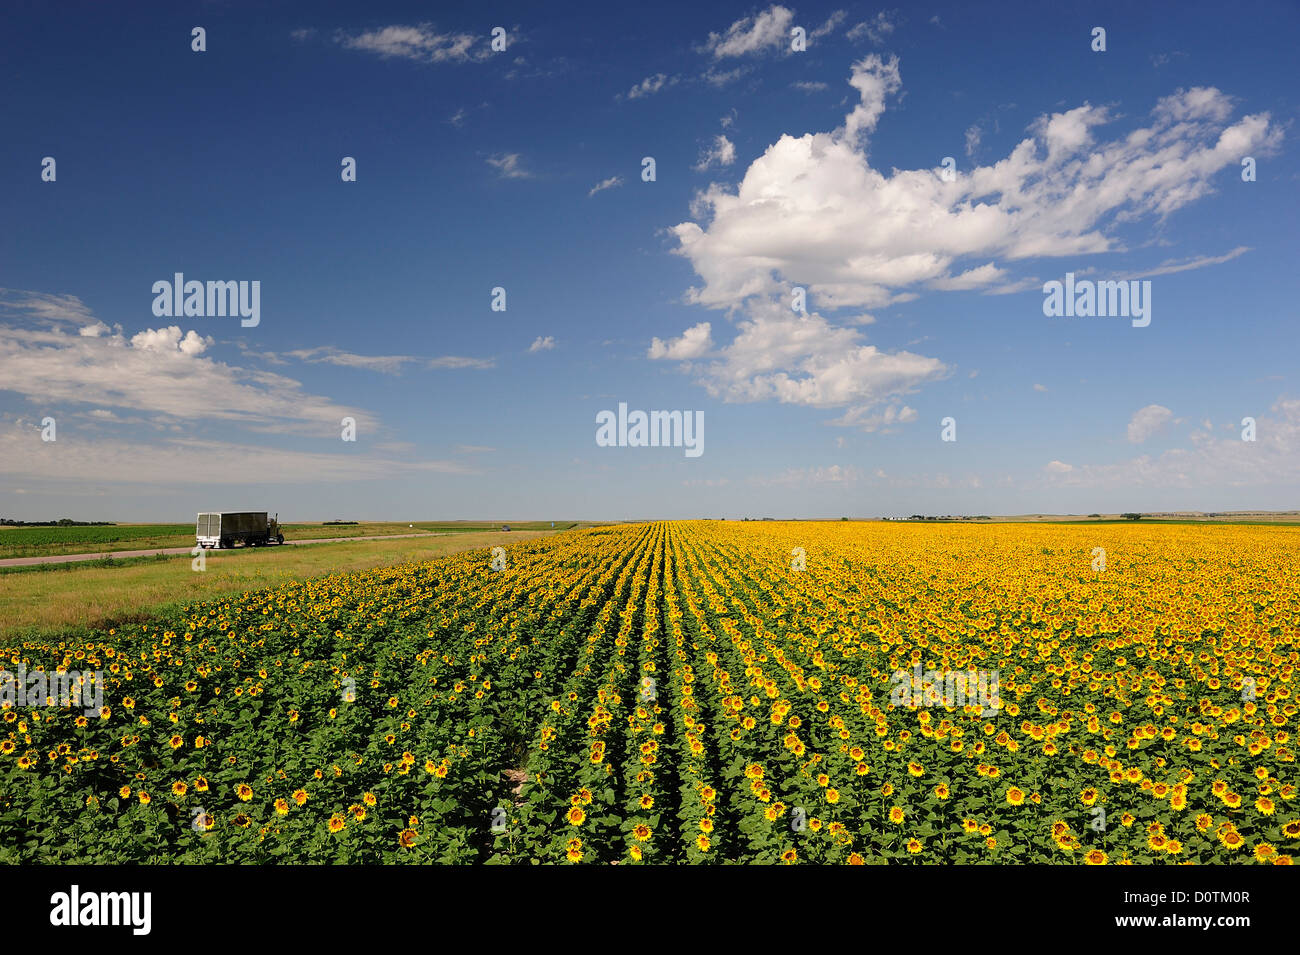 Sunflower, field, farm, Sunflowers, Rushville, Nebraska, USA, United States, America, North America, yellow, agriculture Stock Photo